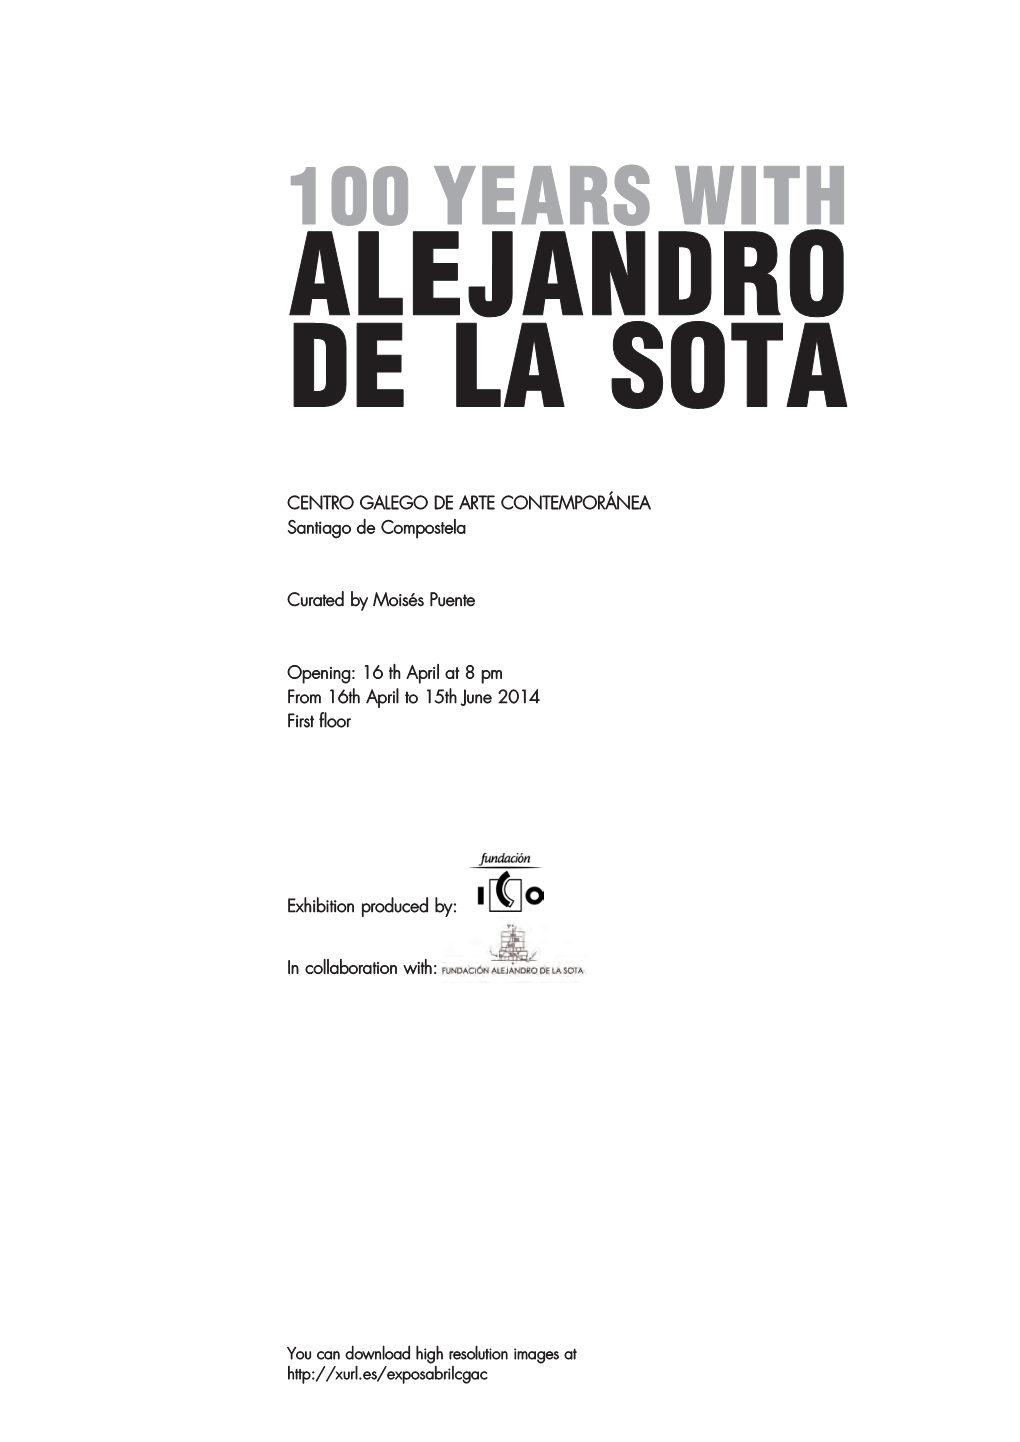 Alejandro De La Sota, Or the Construction of a Mith